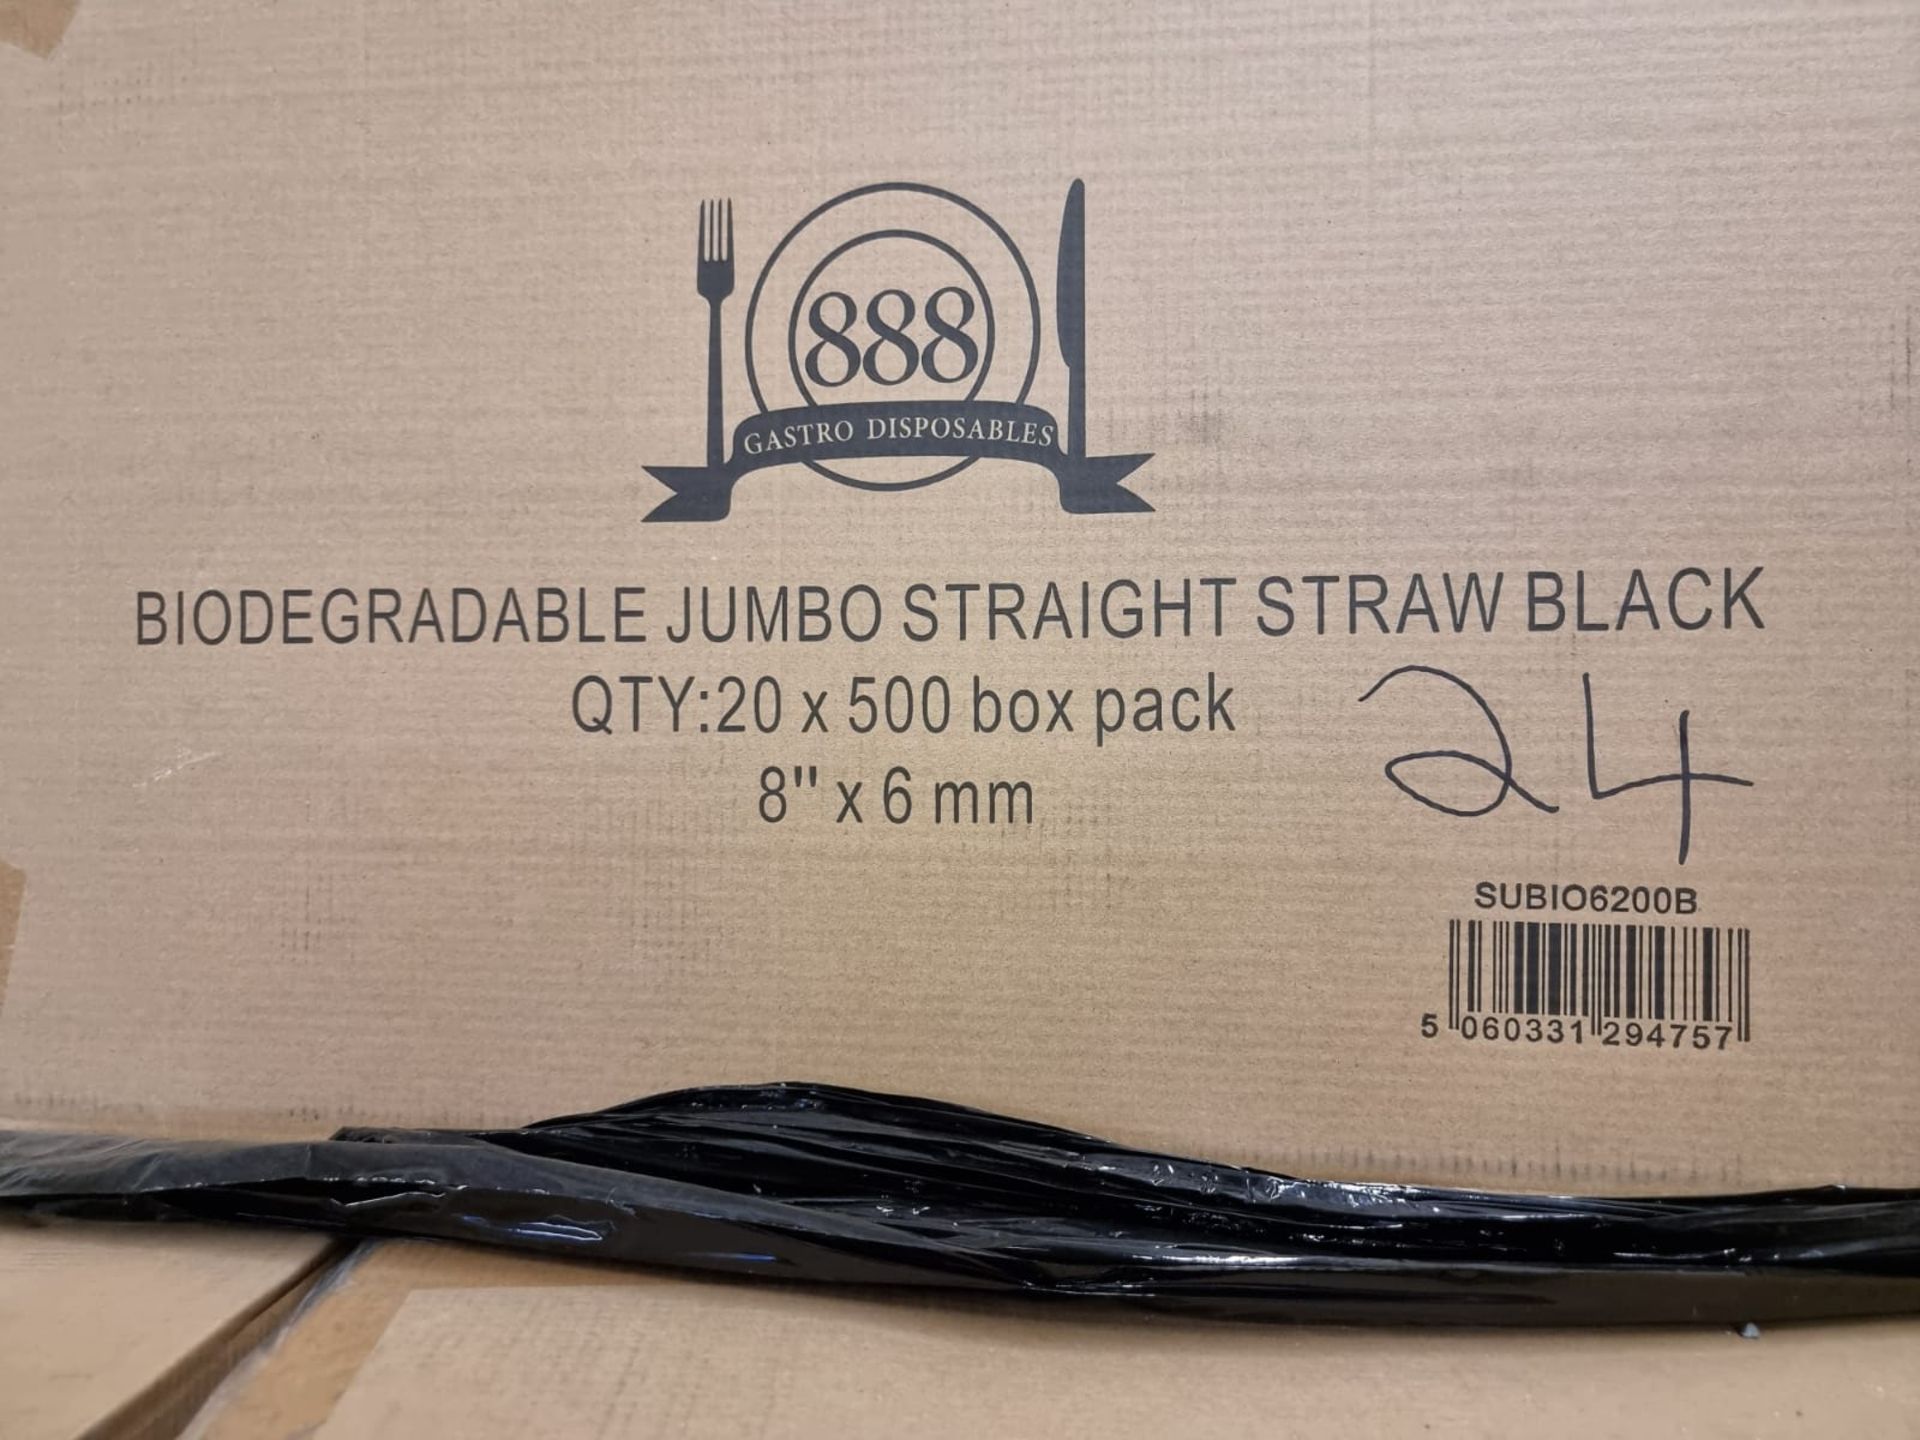 Approx 240,000 BIODEGRADABLE Jumbo Straw | Black - Image 2 of 3